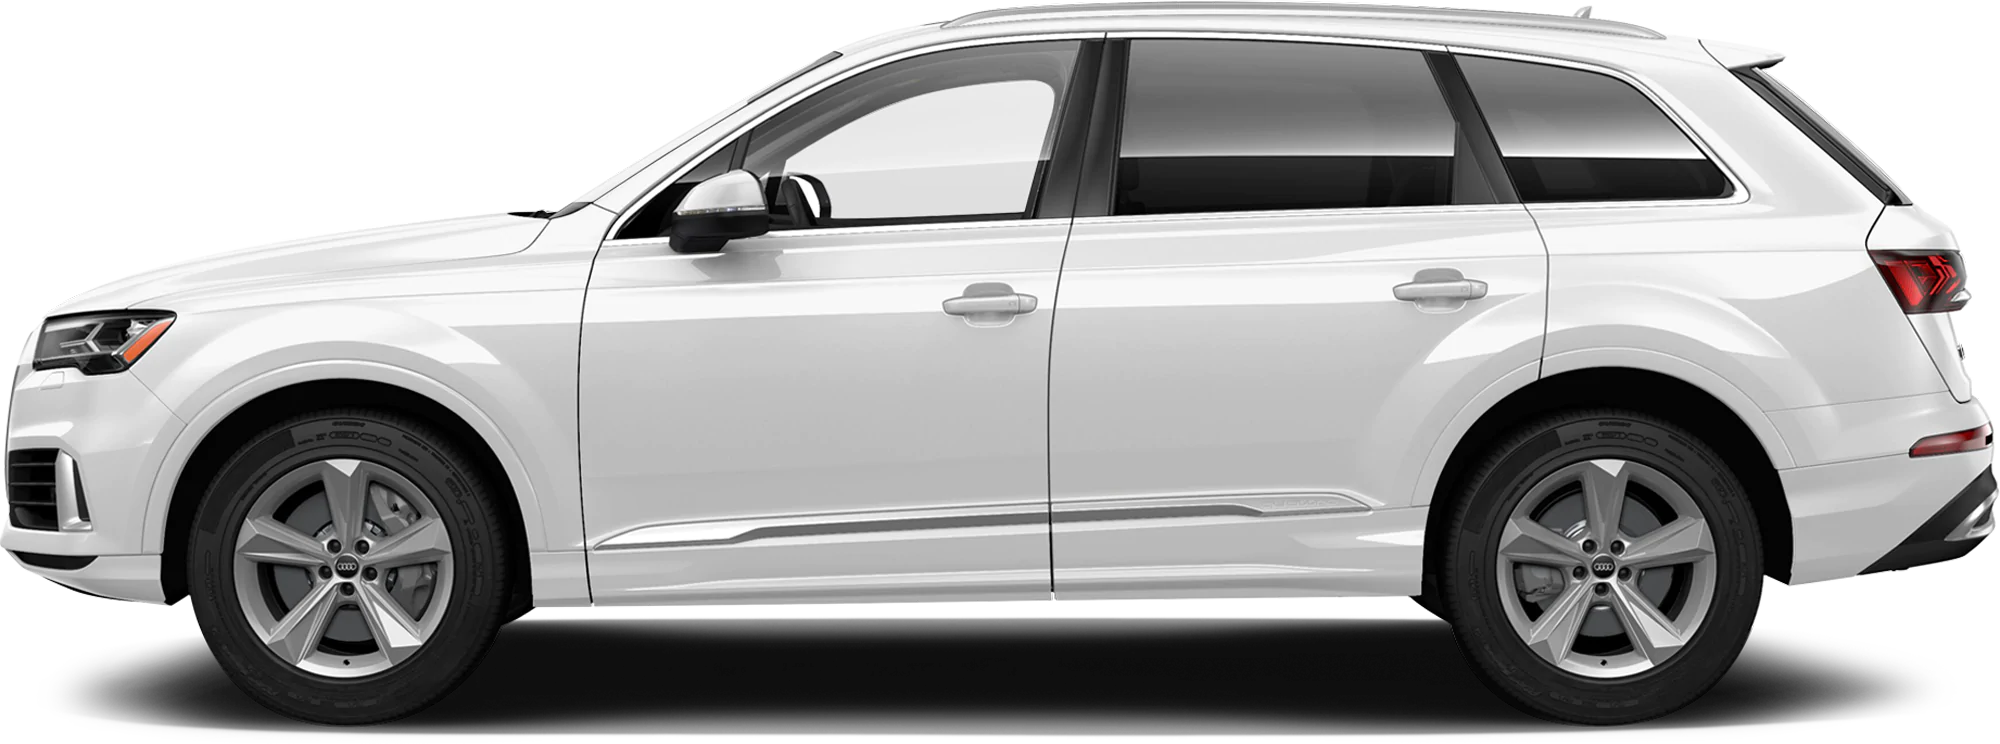 Vista laterale Audi SUV Immagine di PNG